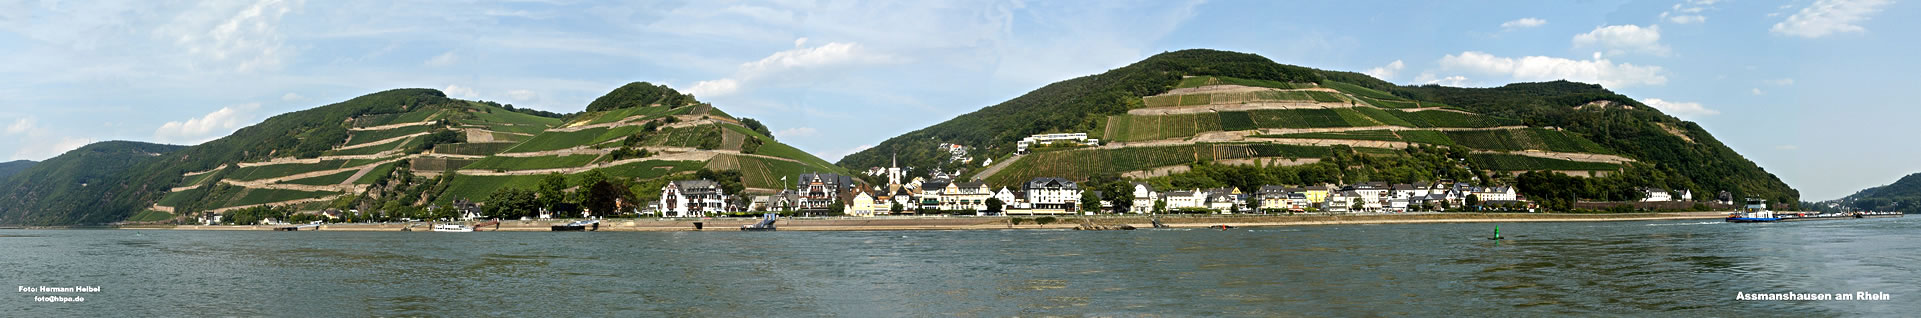 Assmannshausen am Rhein